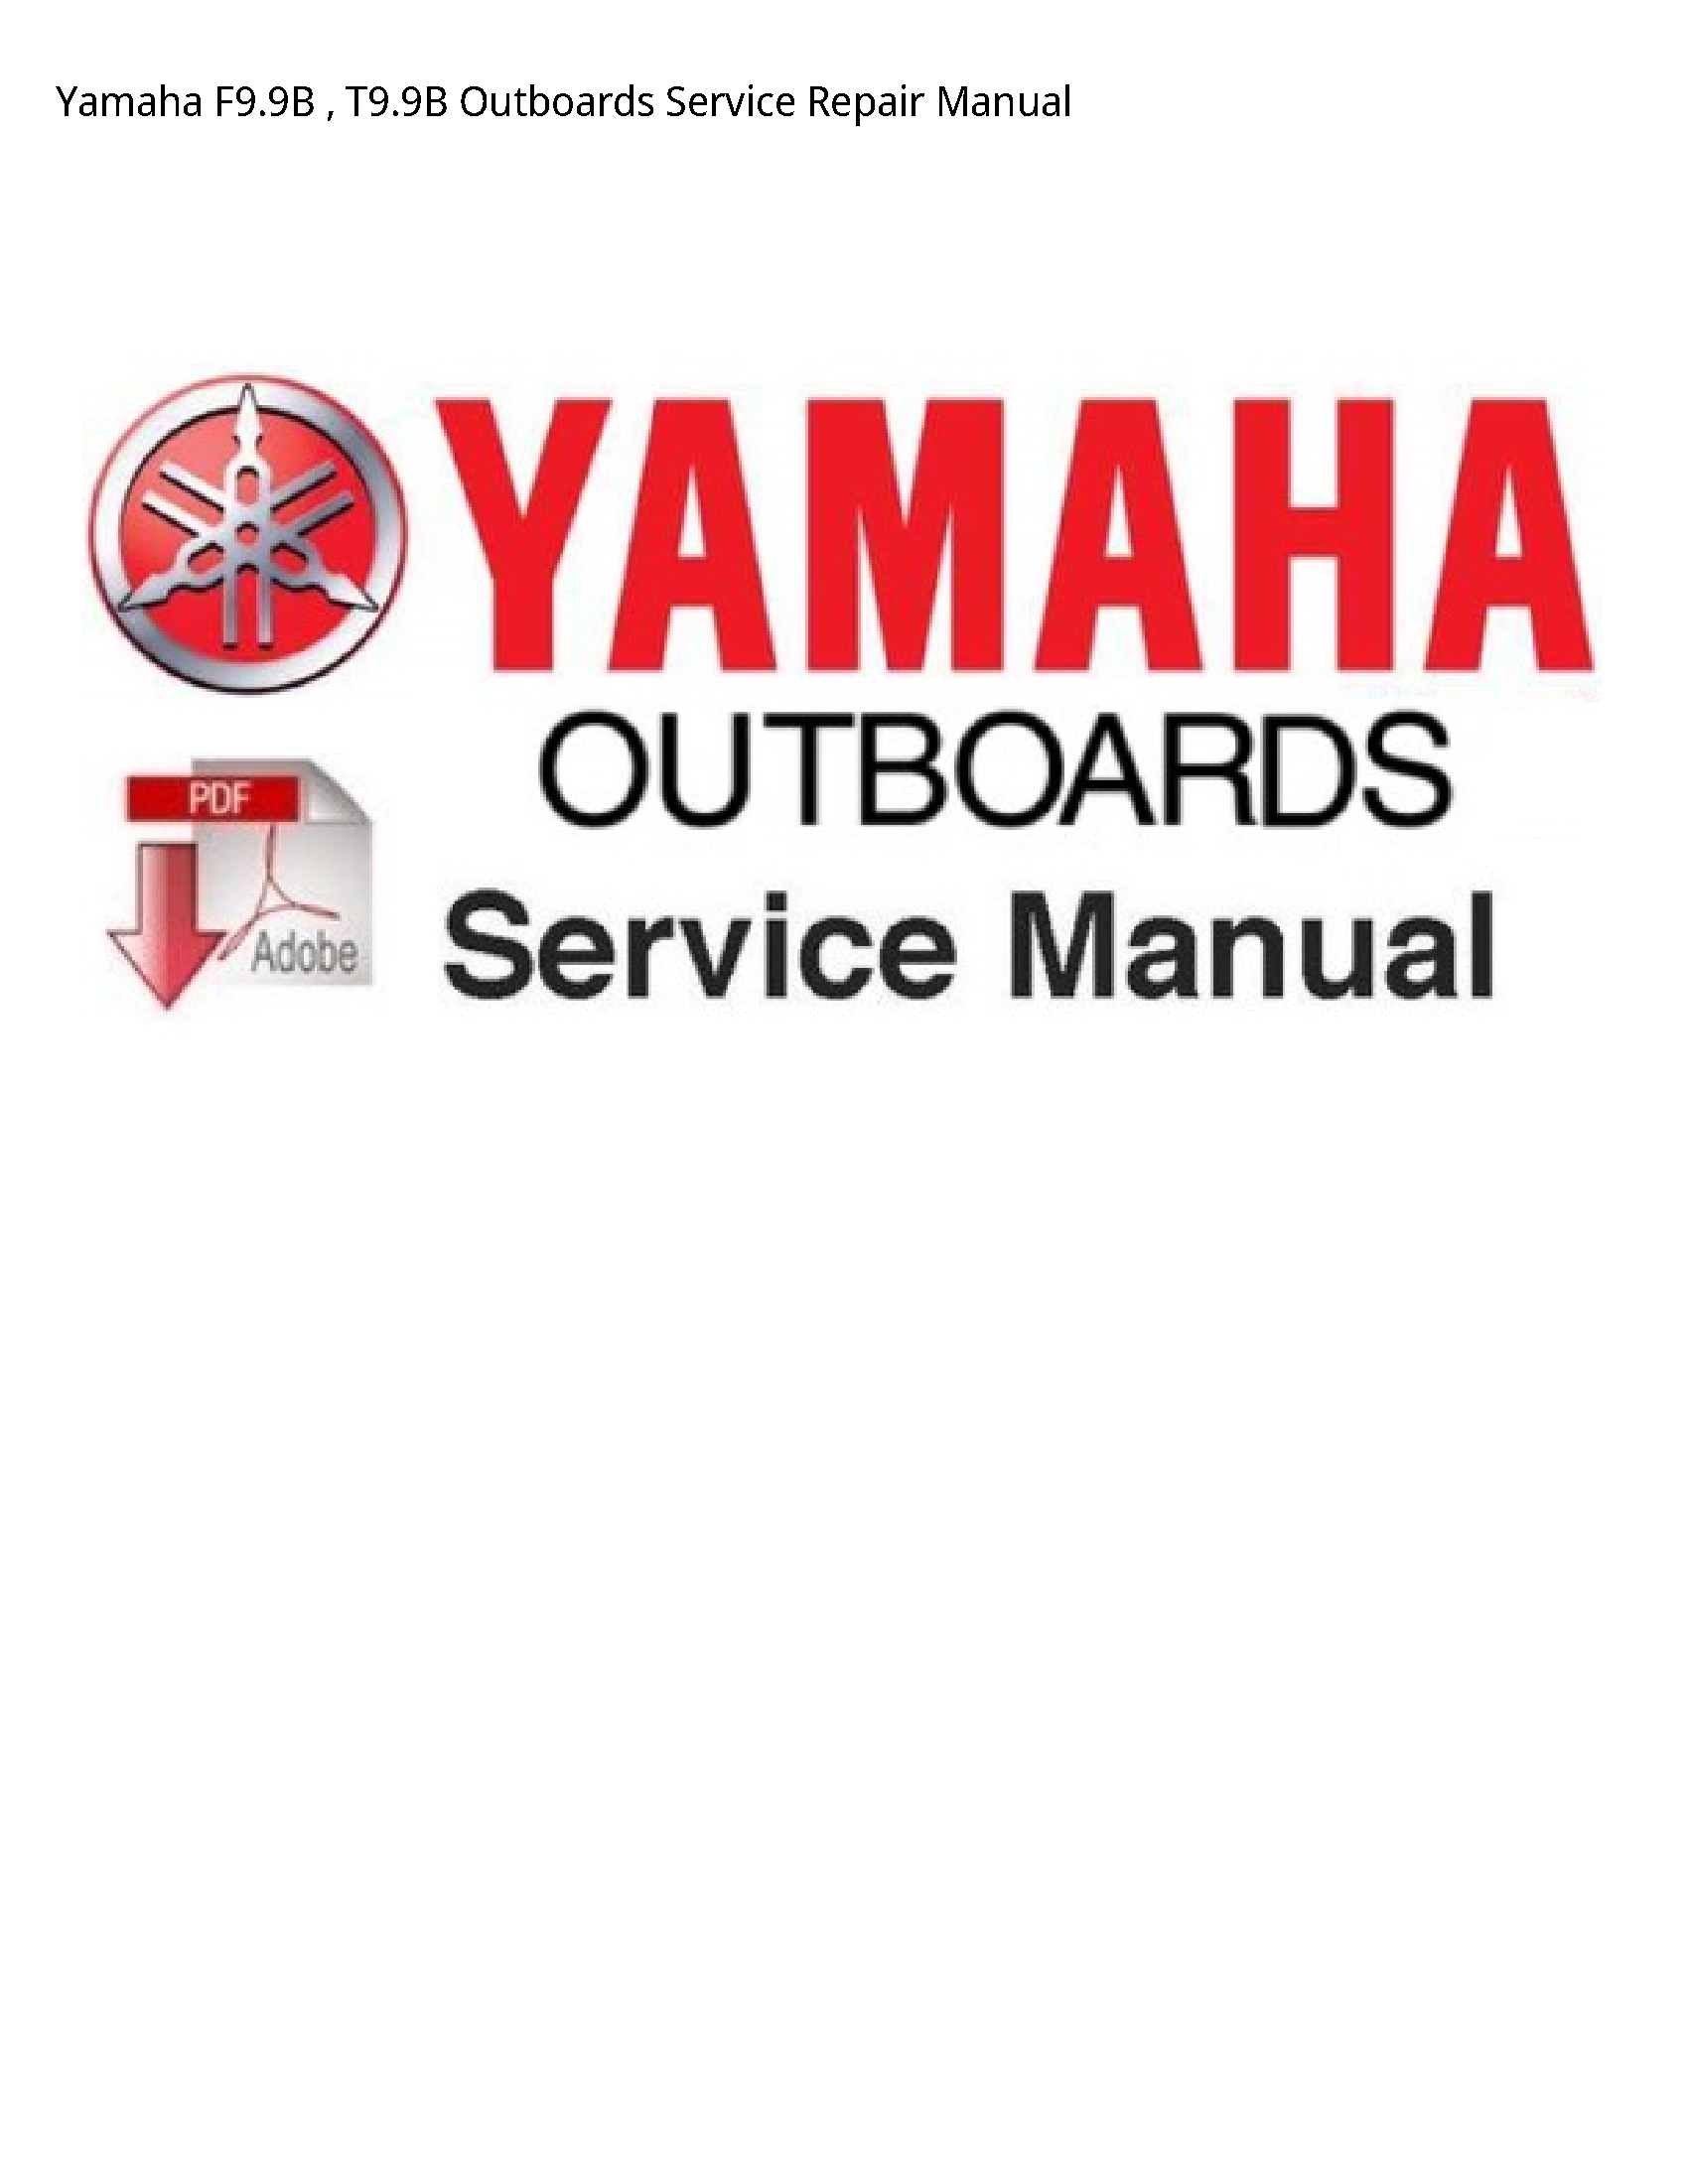 Yamaha F9.9B Outboards manual